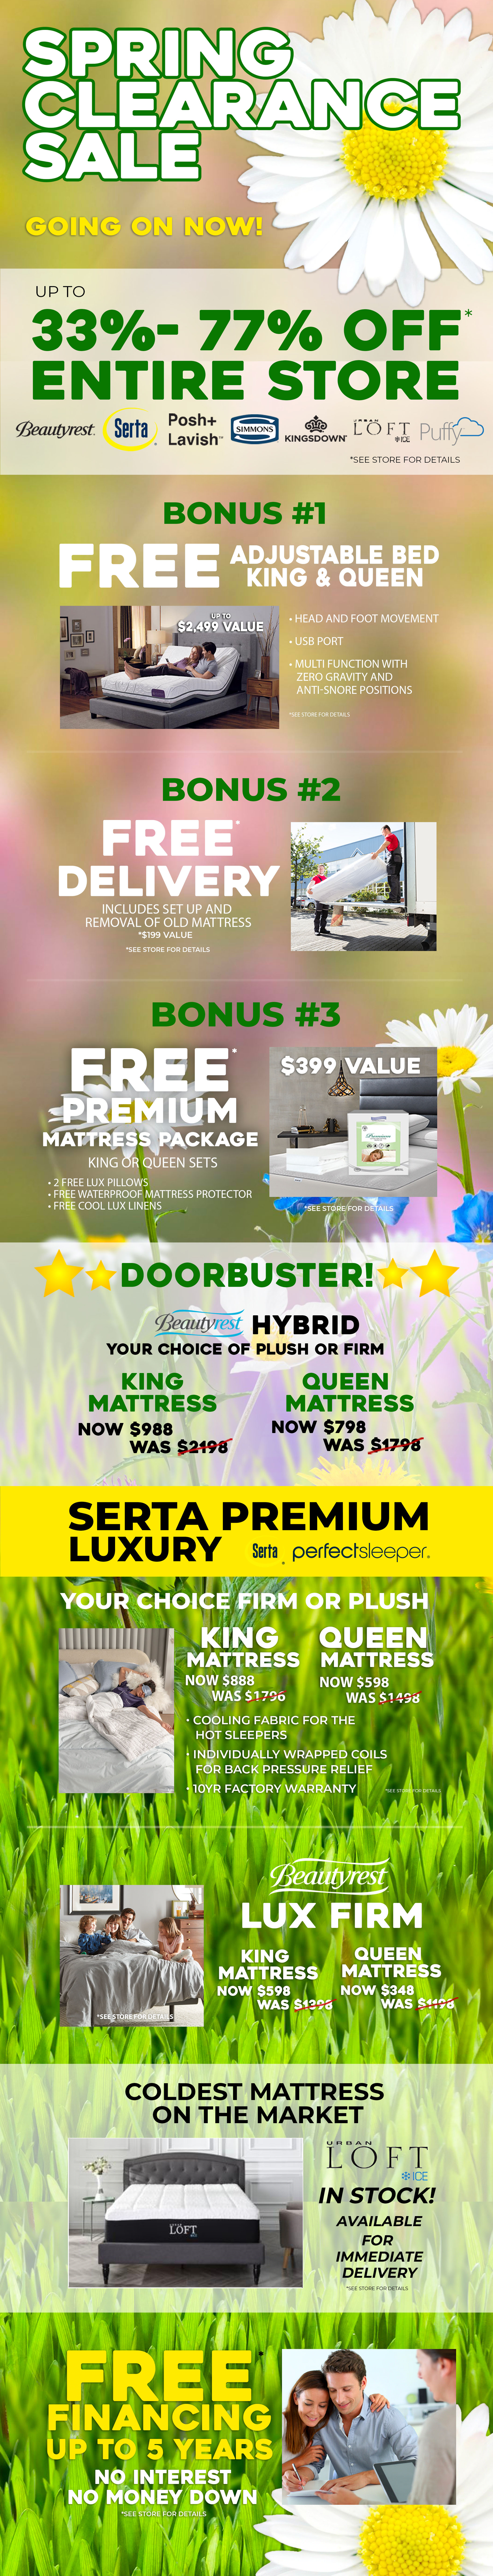 Current Mattress Sales & Promotions at Mattress Market